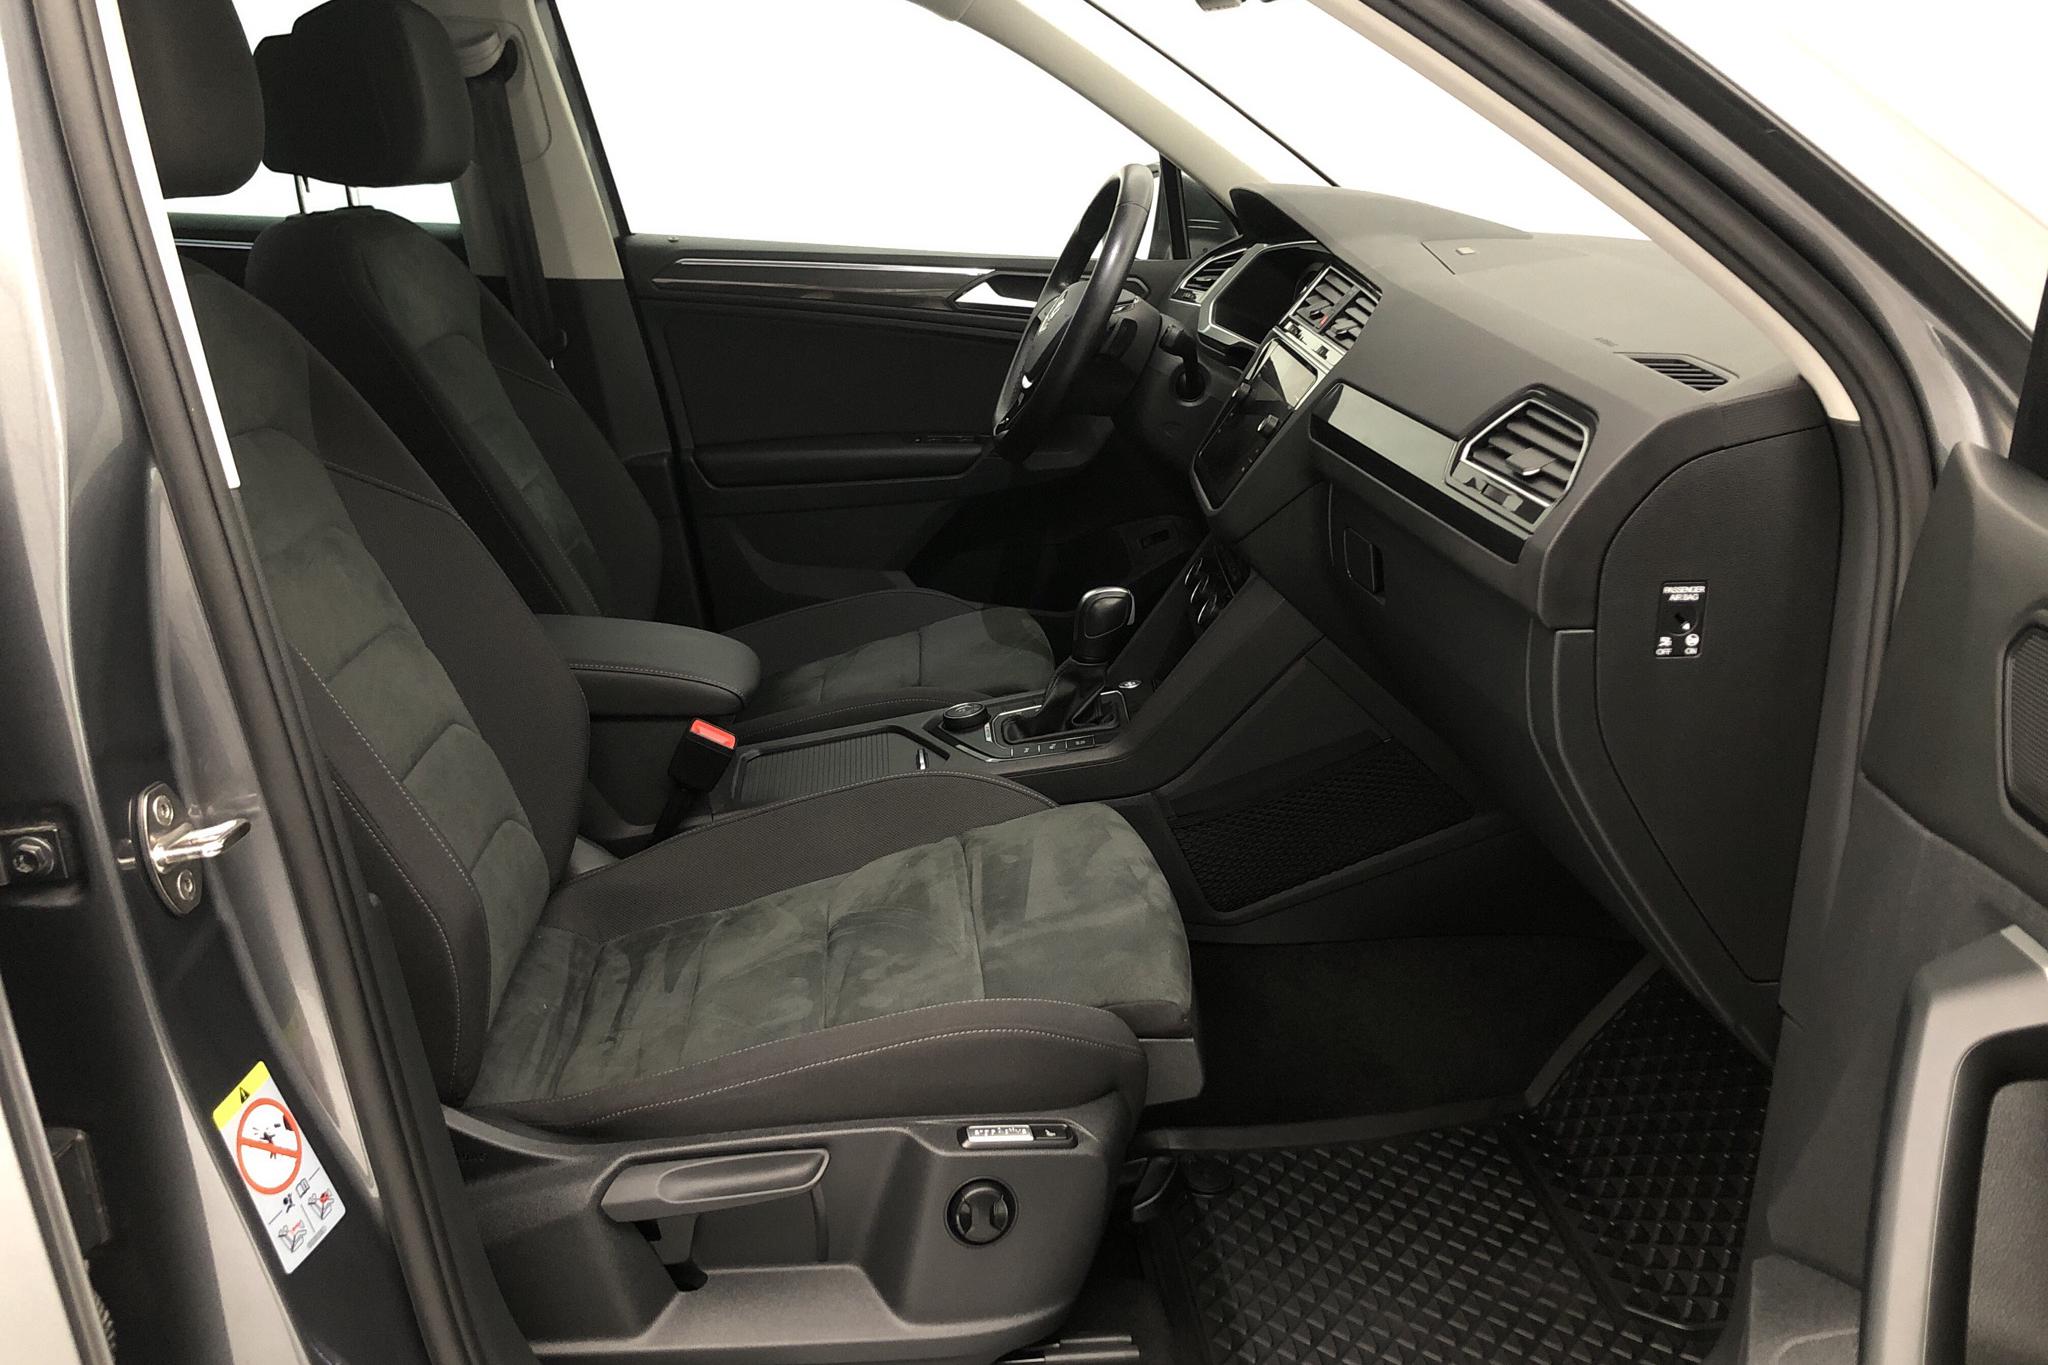 VW Tiguan 2.0 TDI 4MOTION (190hk) - 1 443 mil - Automat - Dark Grey - 2020